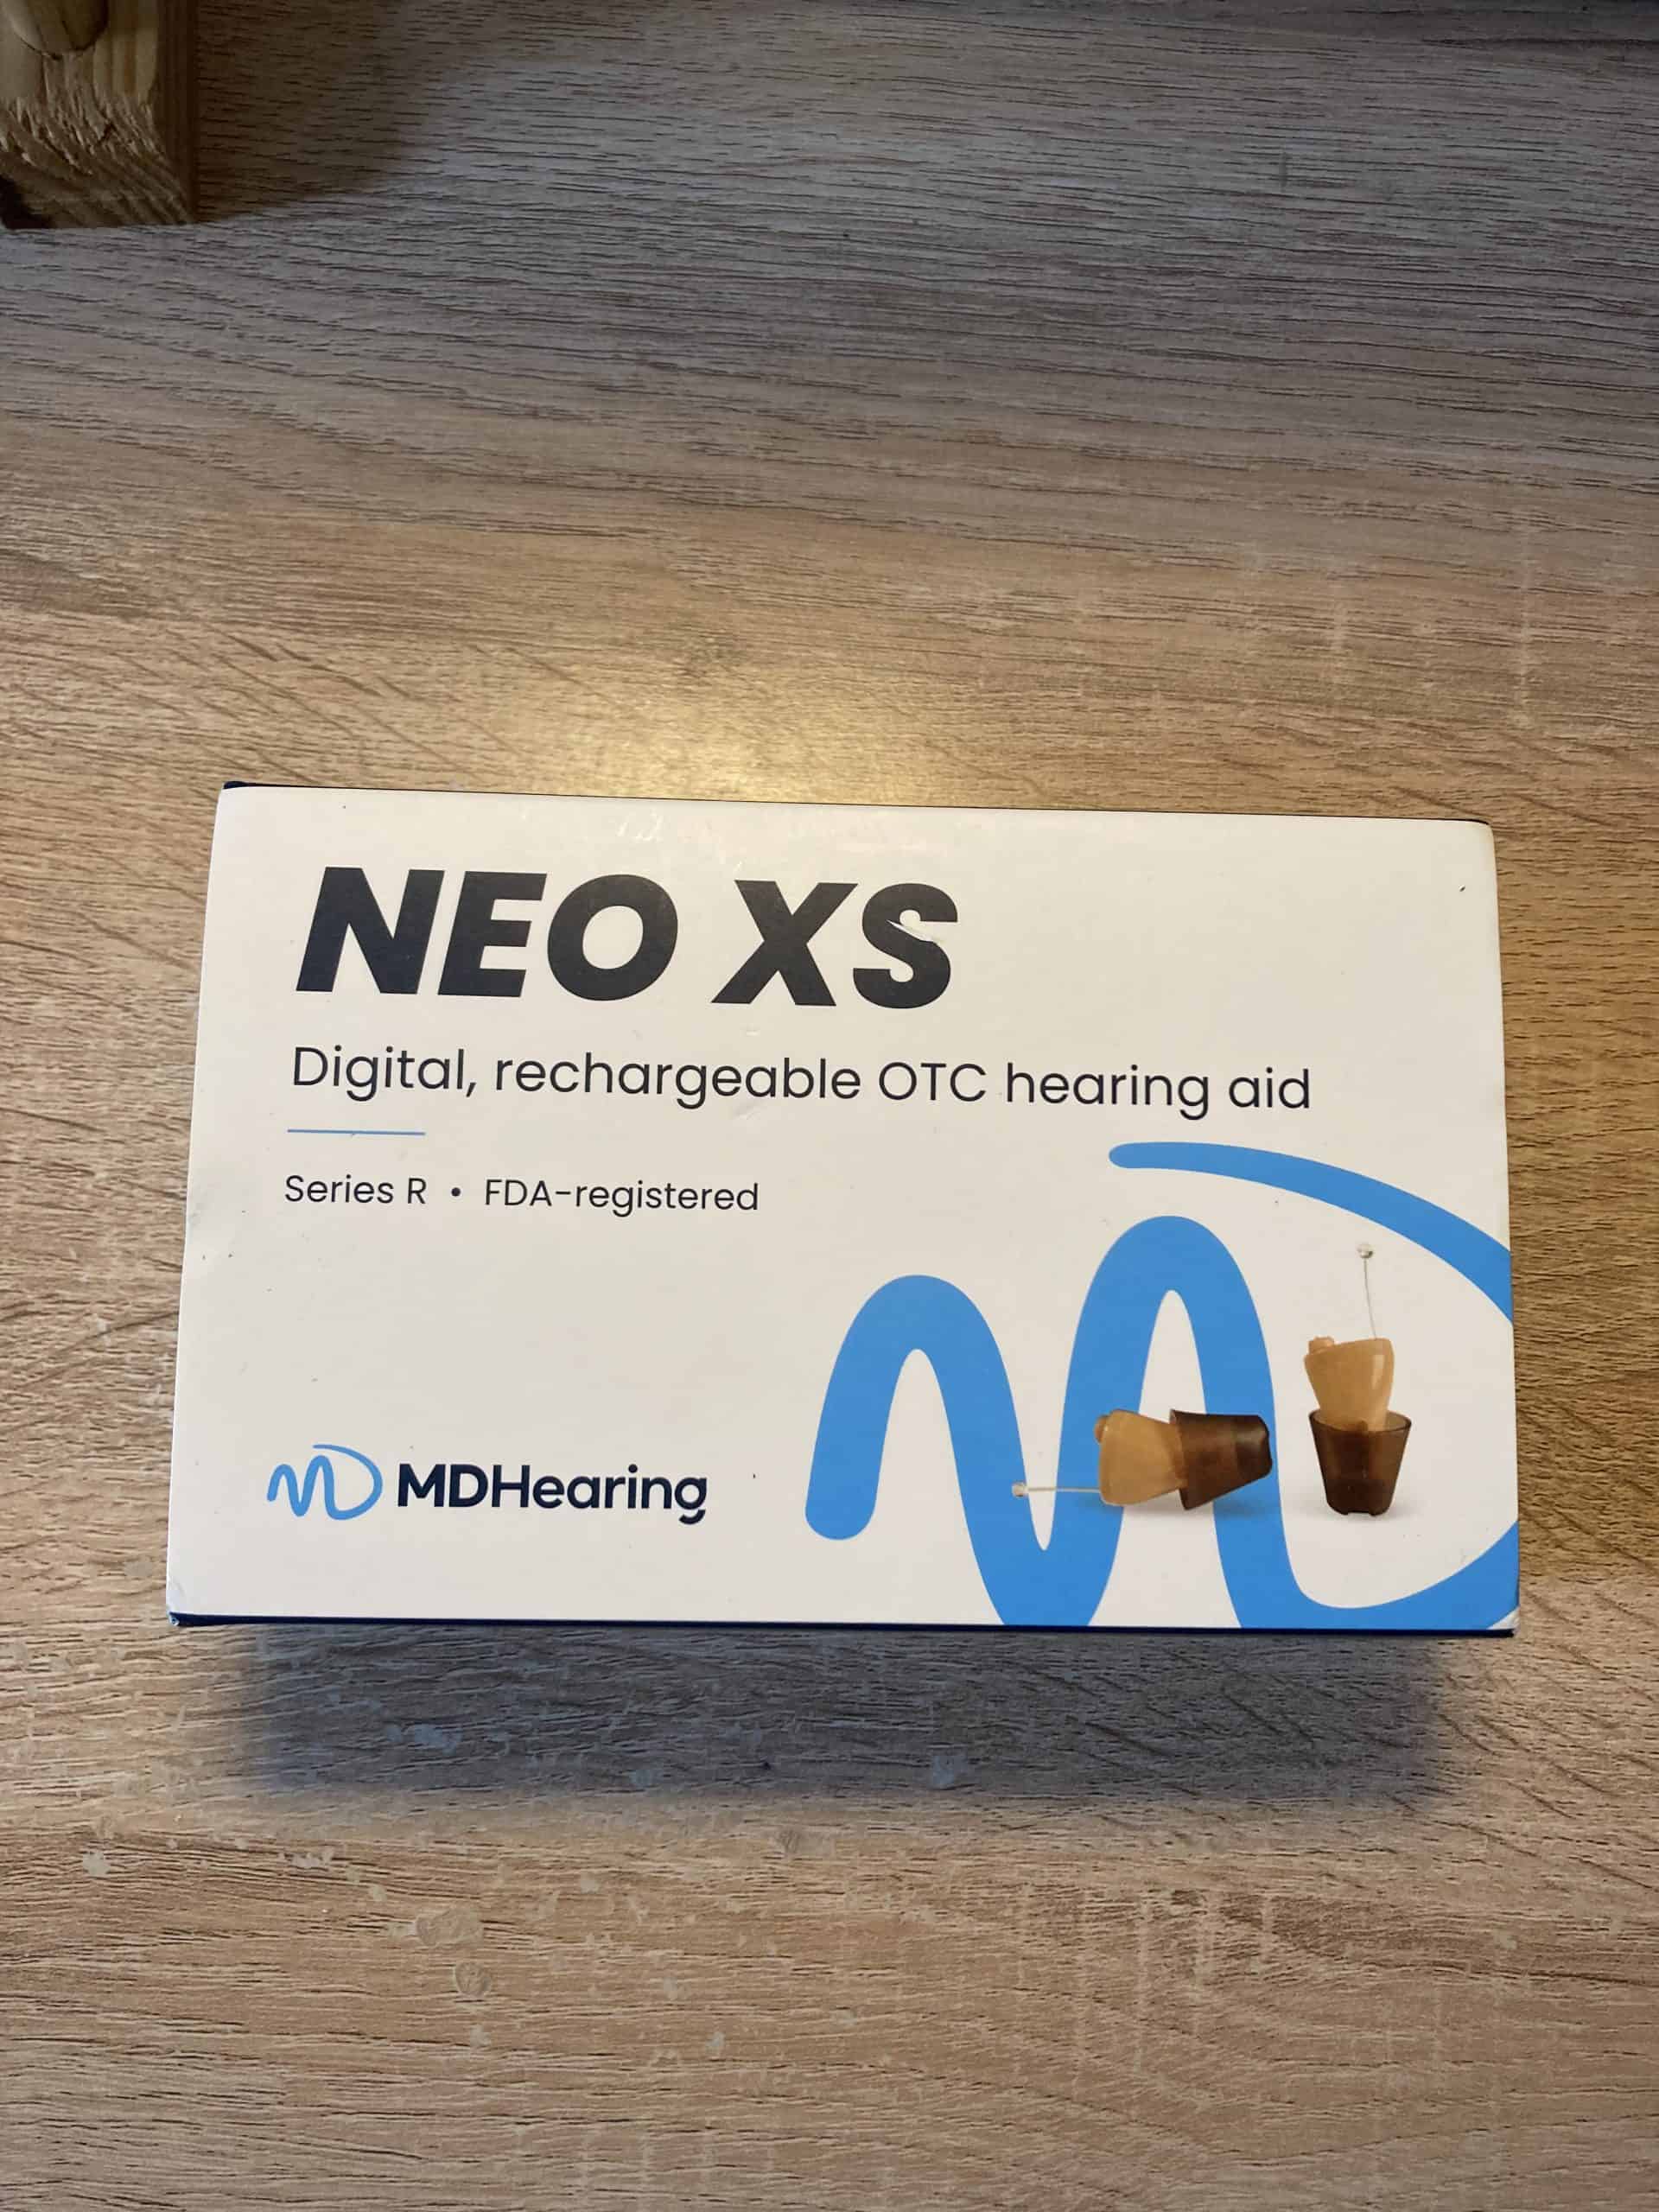 MDHearing's NEO XS hearing aids